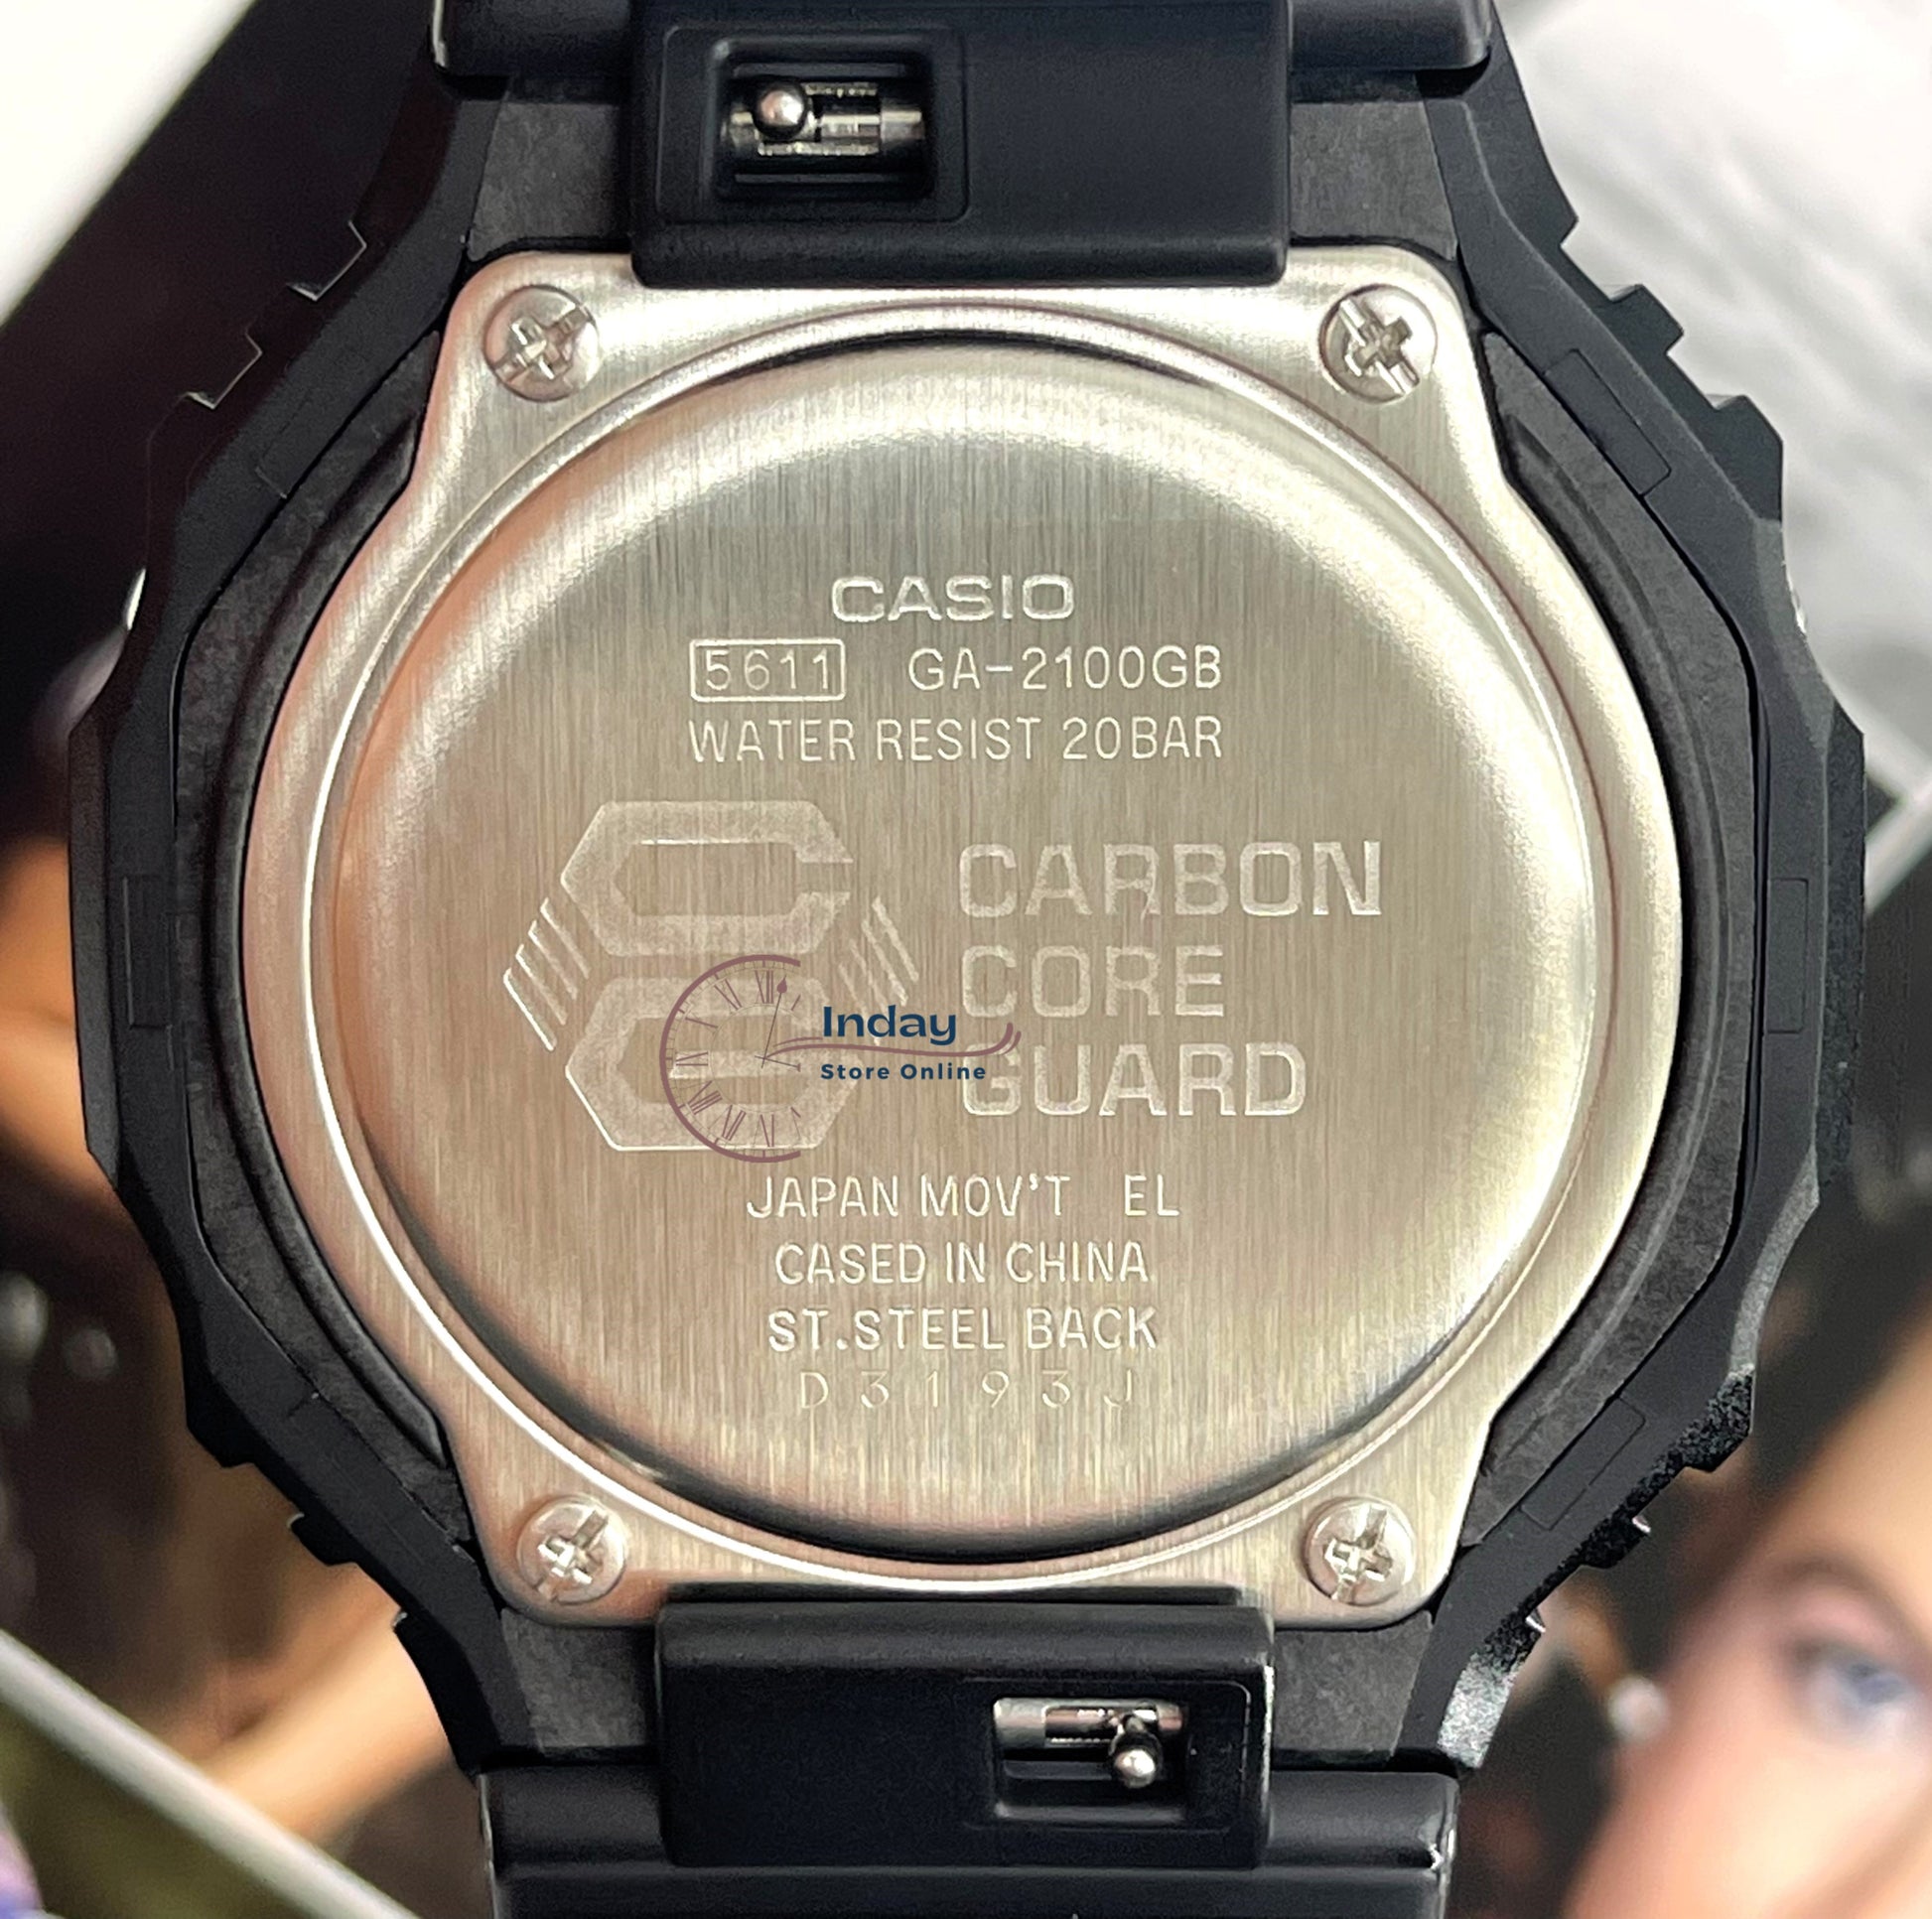 Analog-Digital G-Shock Shoc Men\'s Watch Series 2100 indaystoreonline GA-2100GB-1A – Casio